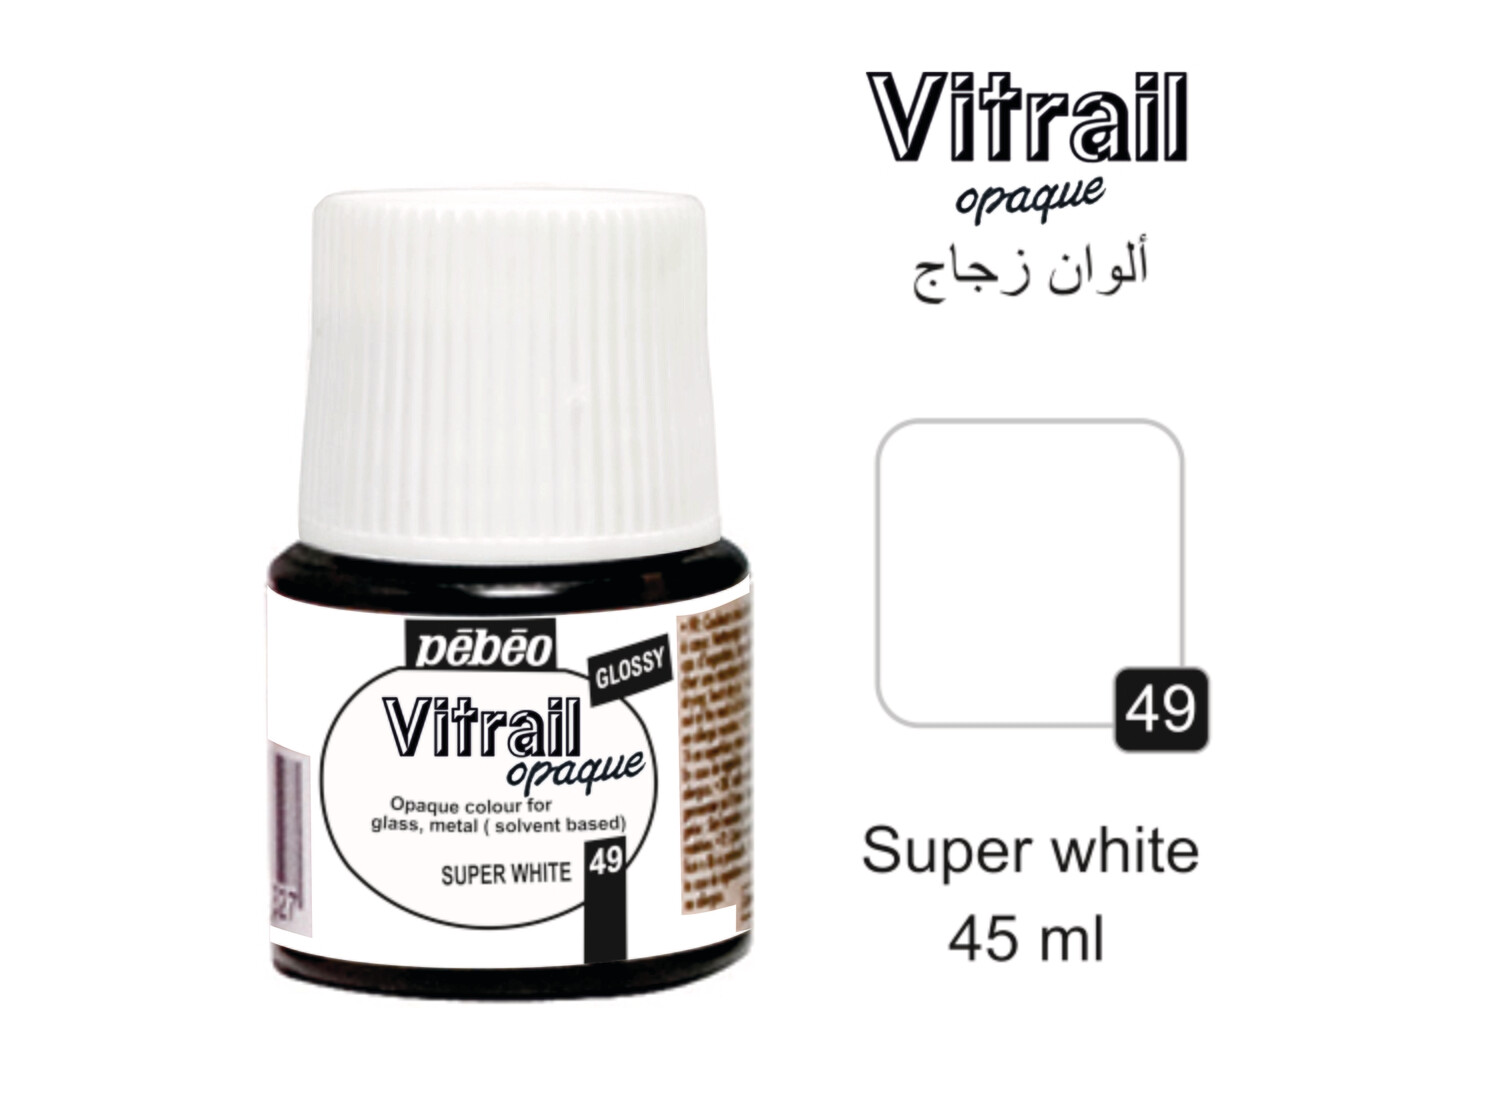 VITRAIL glass colors Super white No. 49, 45 ml, Opaque